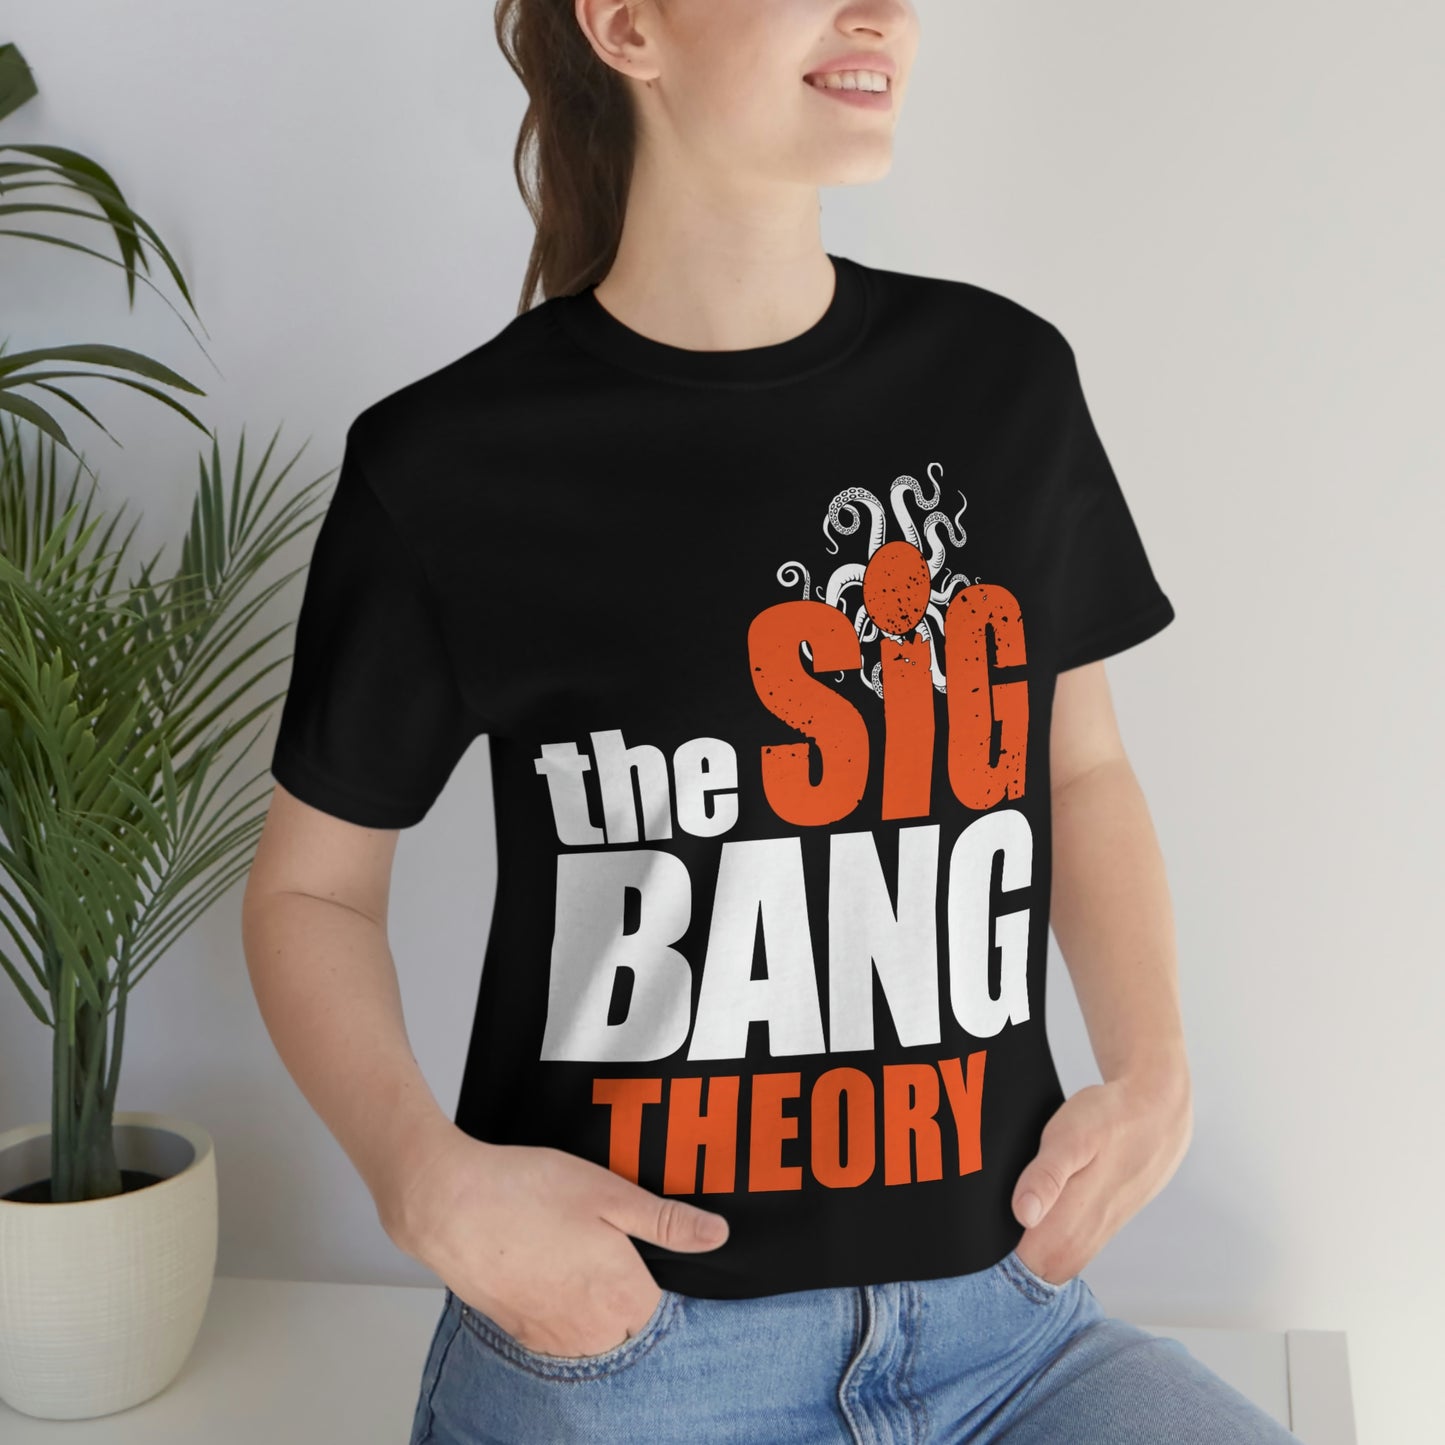 SiglerFest 2019: The Sig Bang Theory